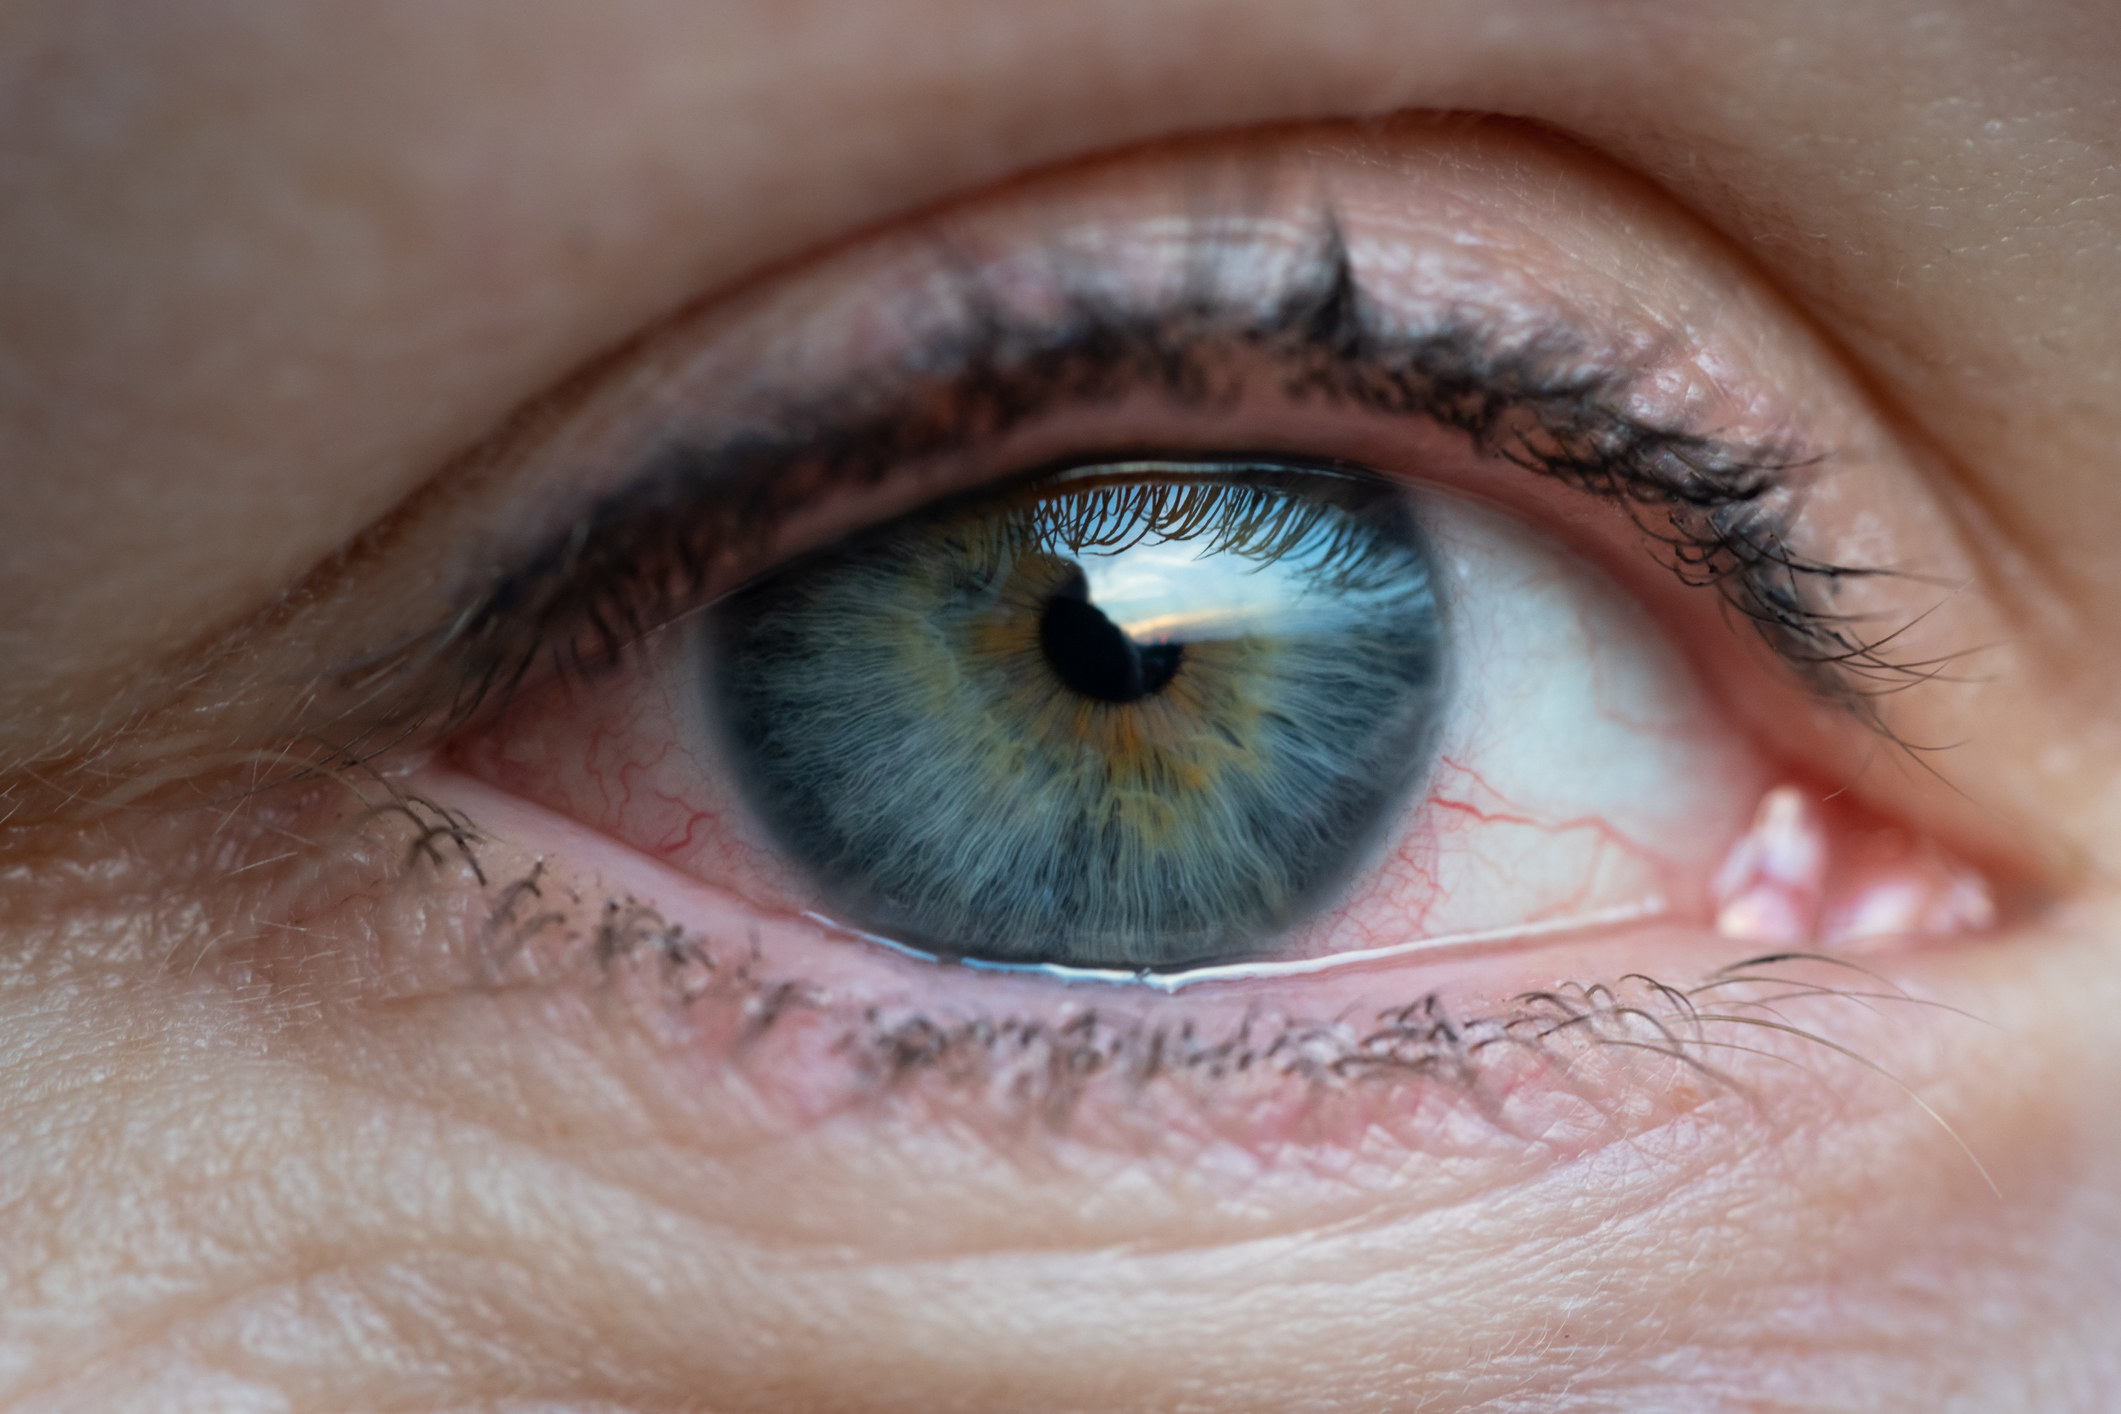 Closeup of a human eye